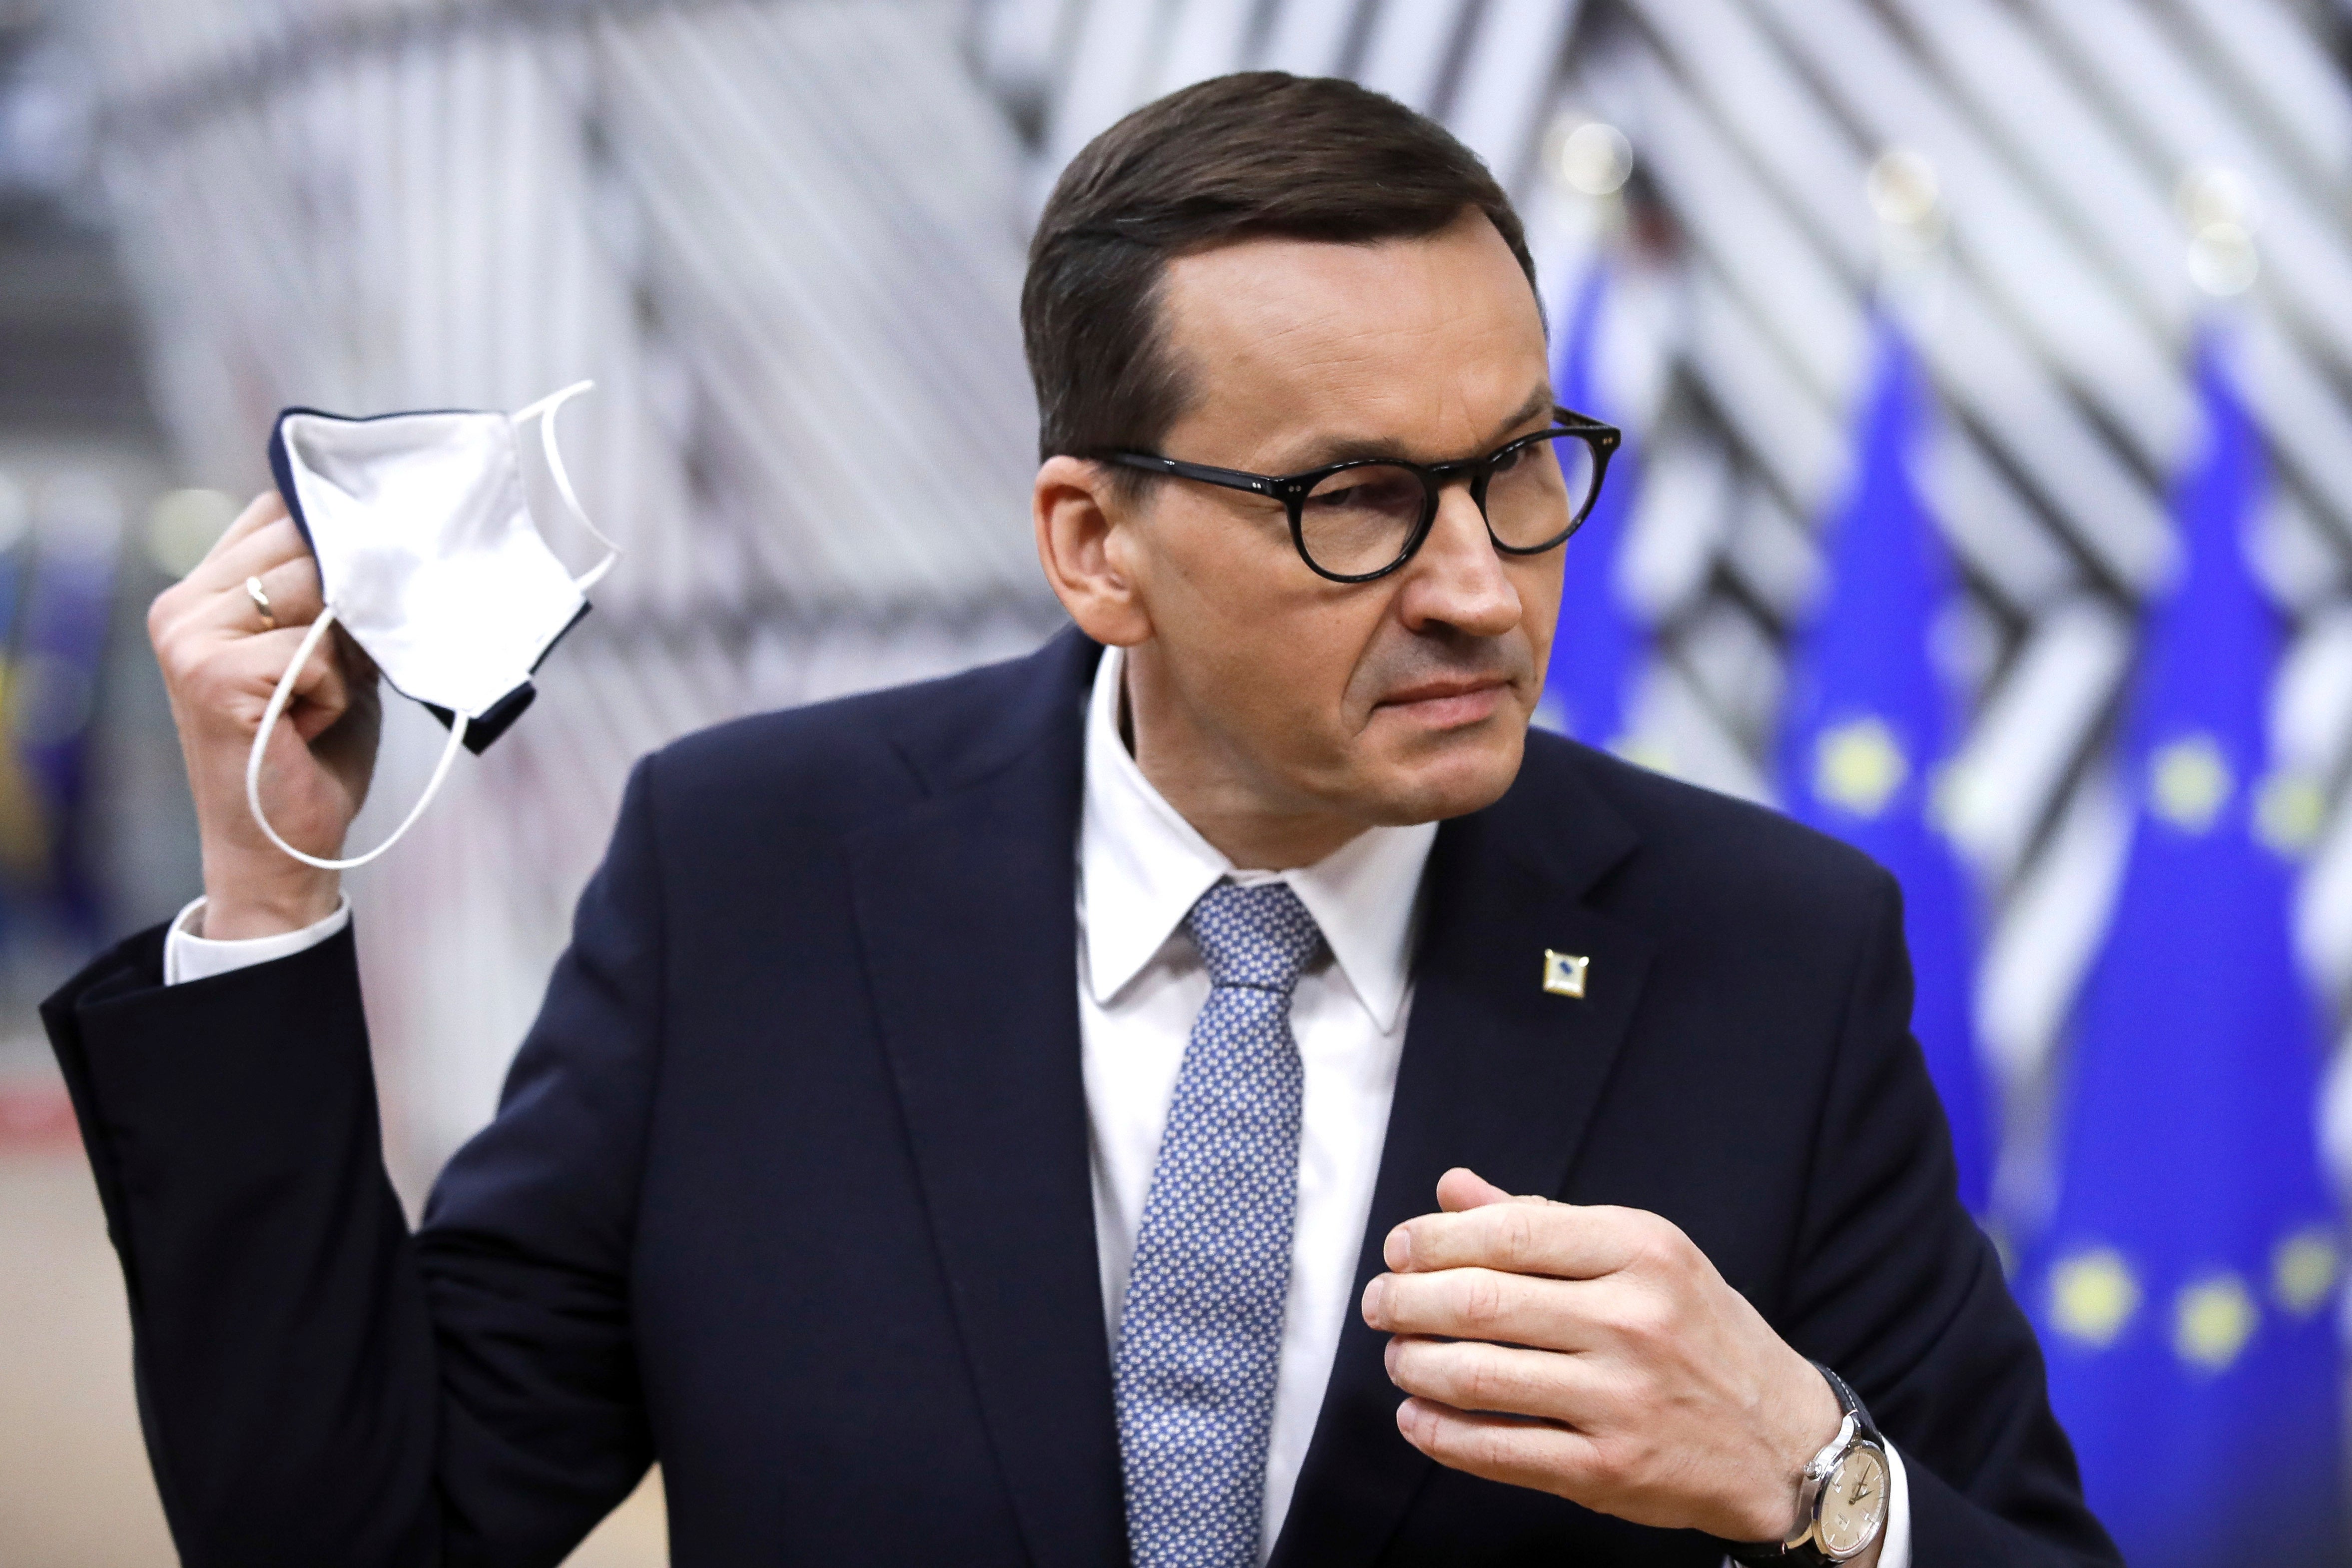 Poland’s prime minister Mateusz Morawiecki clashed with the EU’s Ursula von der Leyen on Tuesday